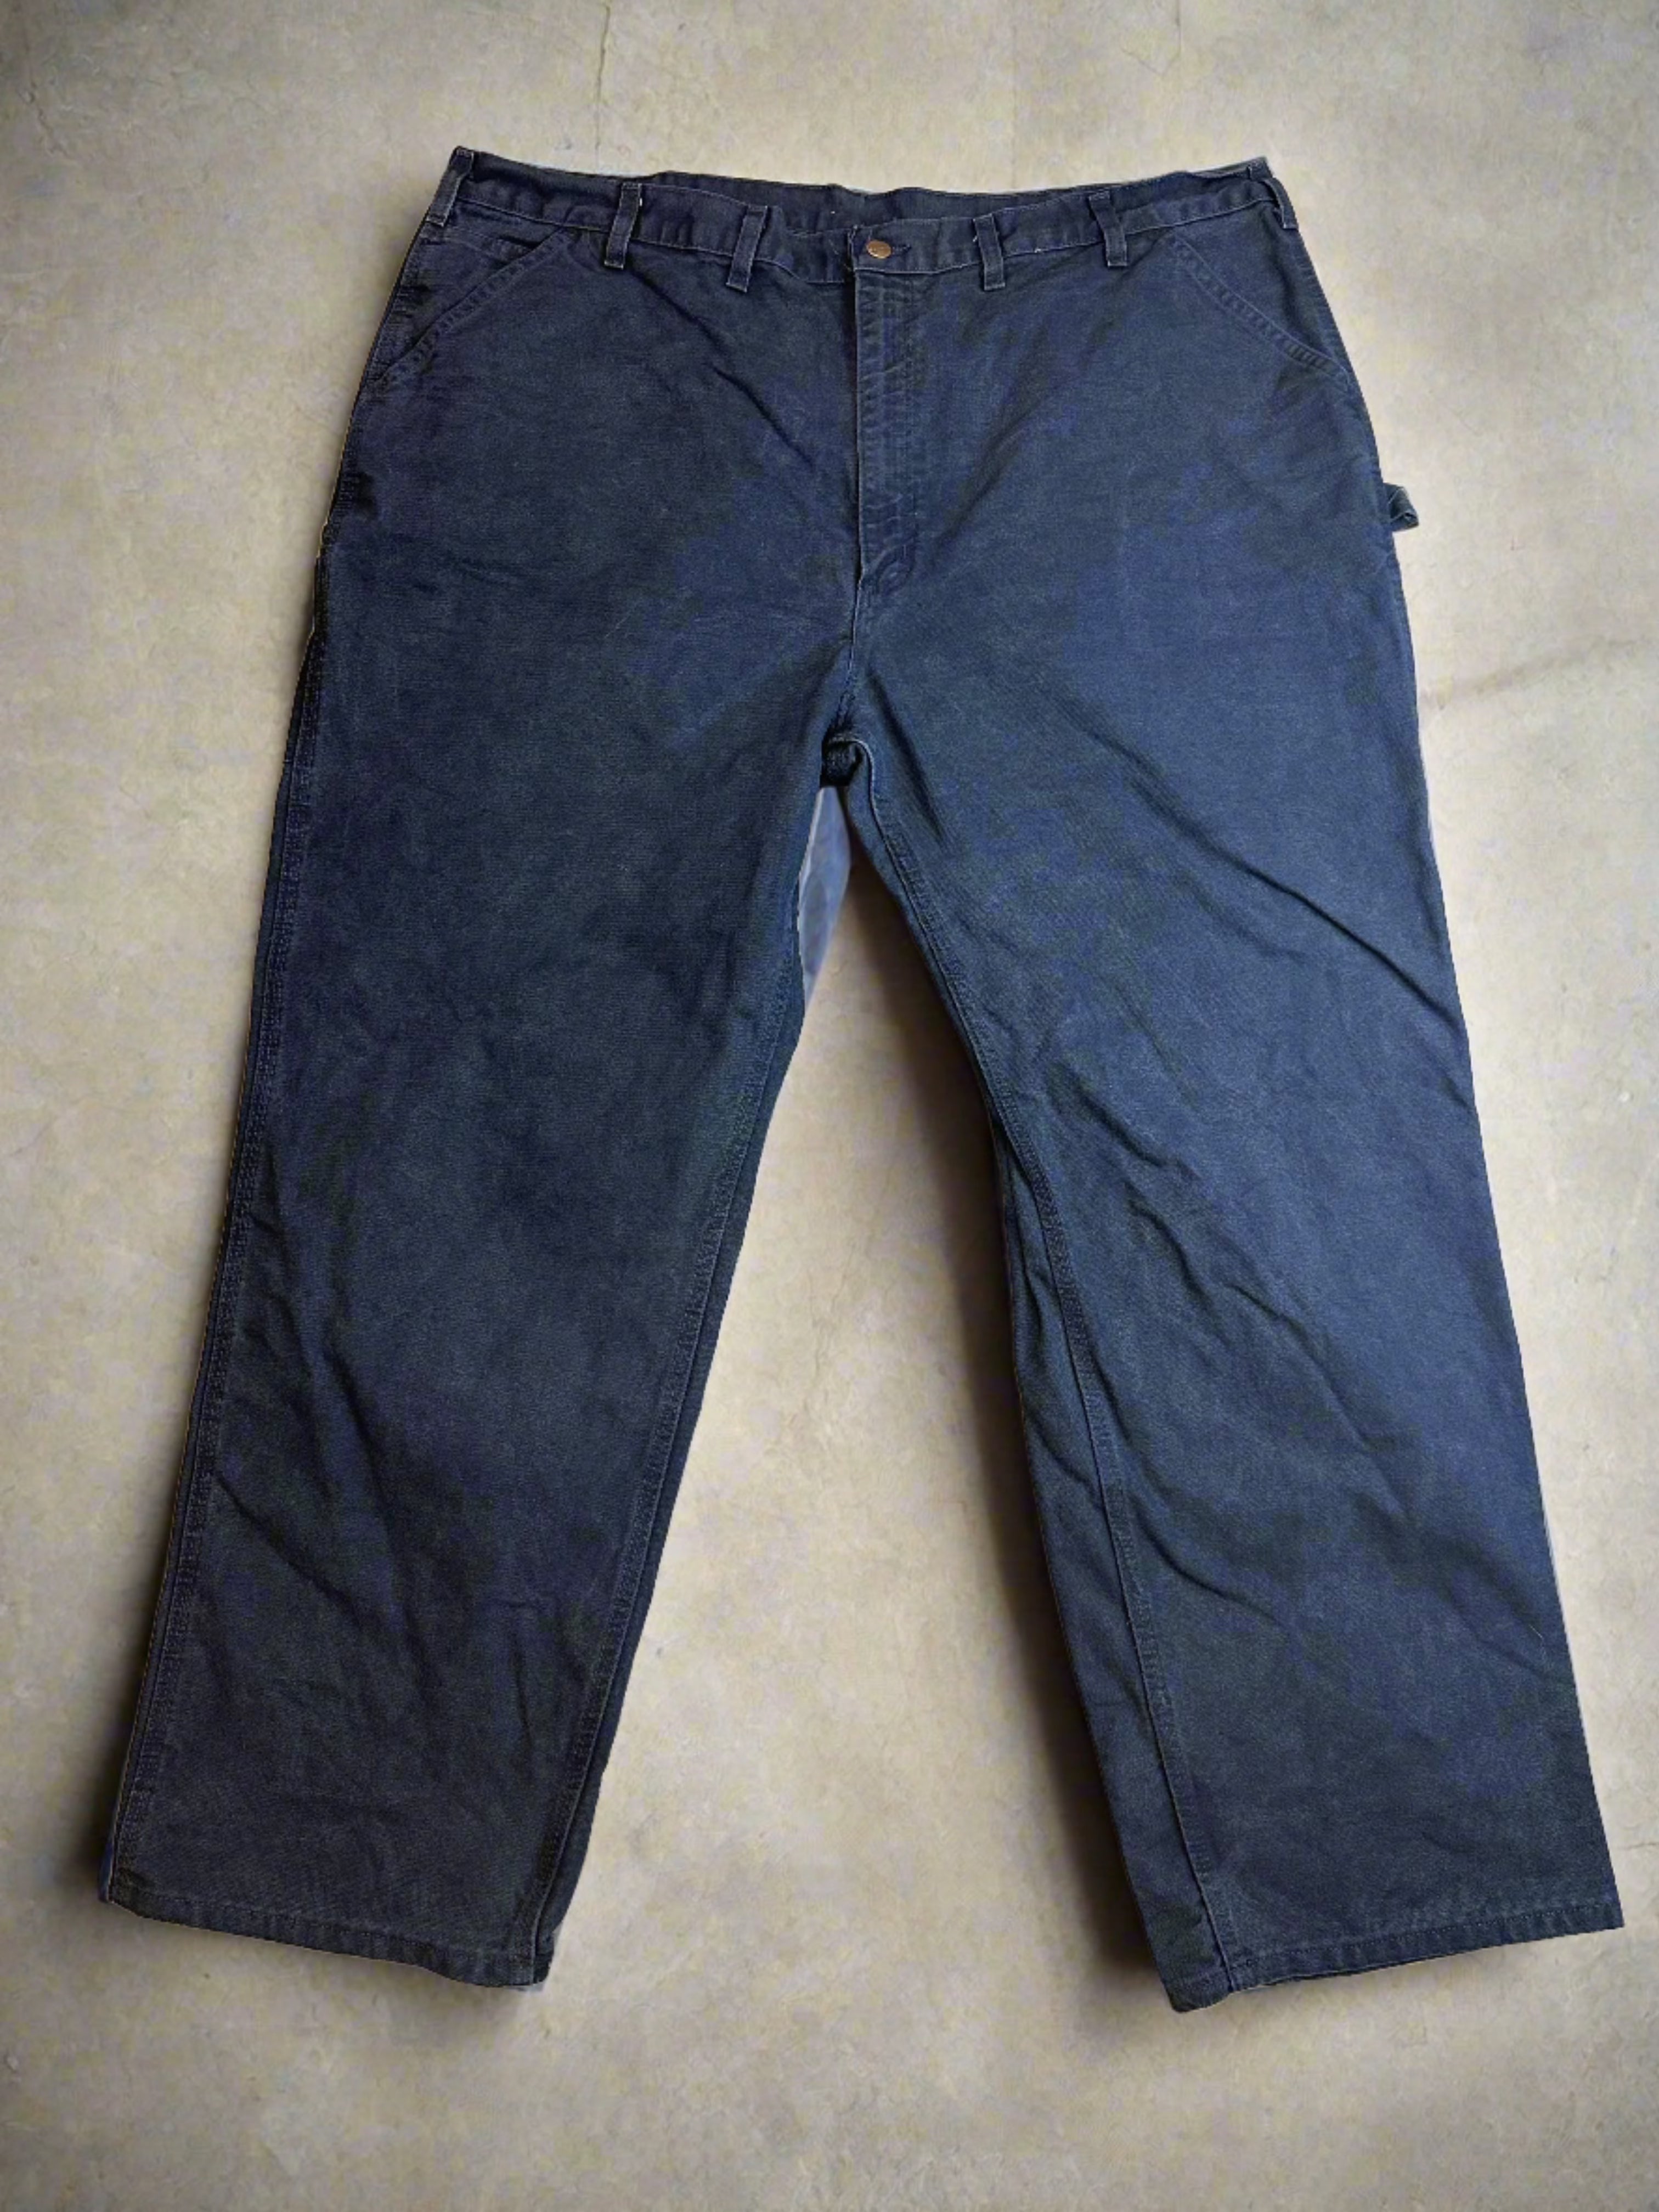 Vintage Carhartt Carpenter Pants - 46x32